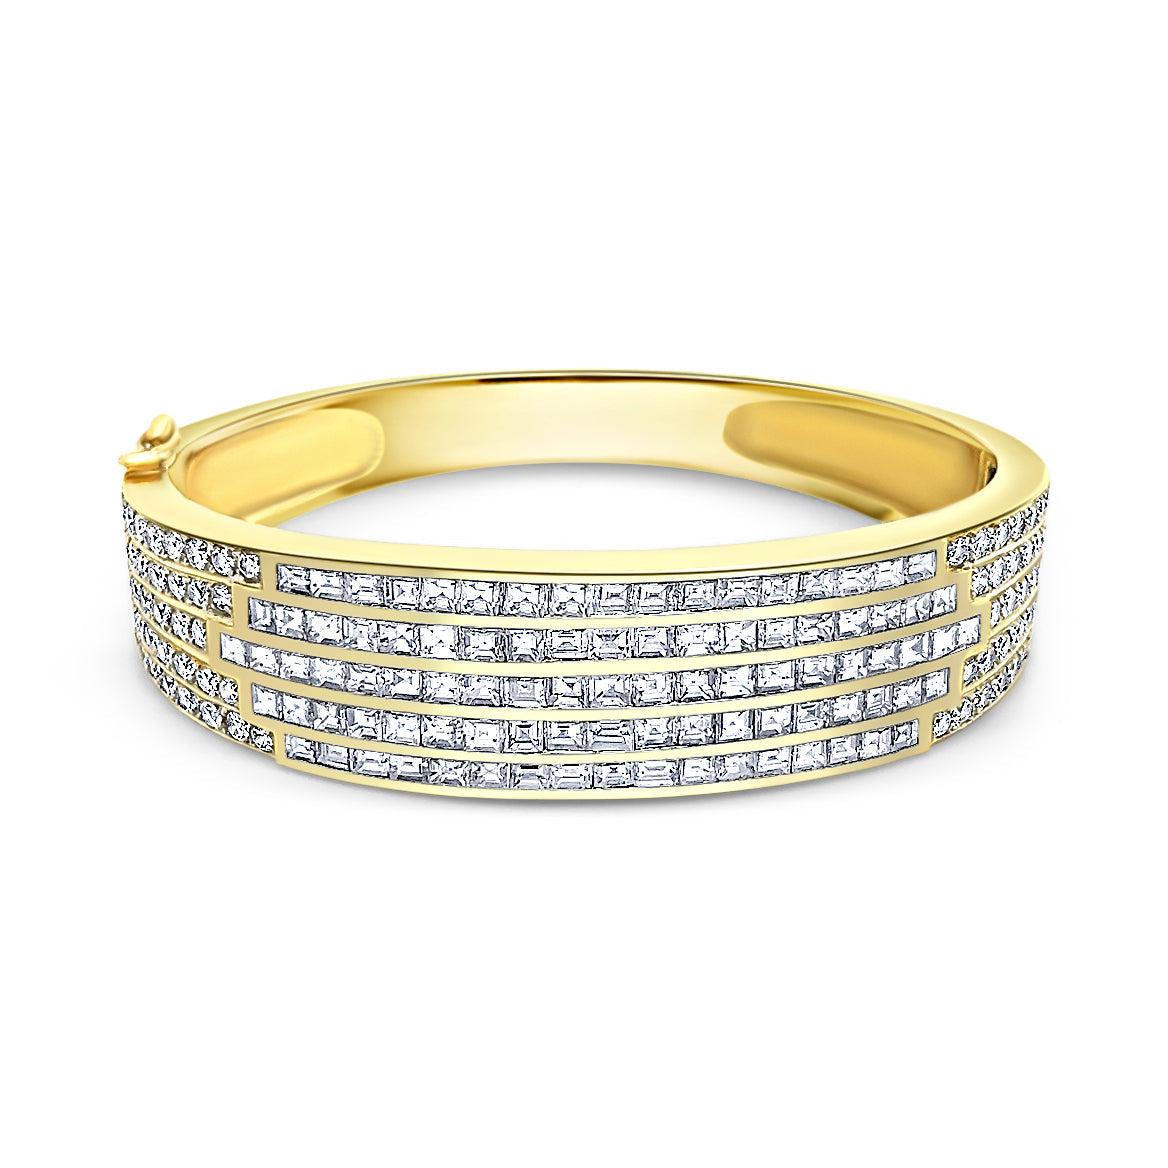 10 Carat TW Diamond Encrusted Multi Row Bangle Bracelet in 18K Yellow Gold-Bracelet-ASSAY